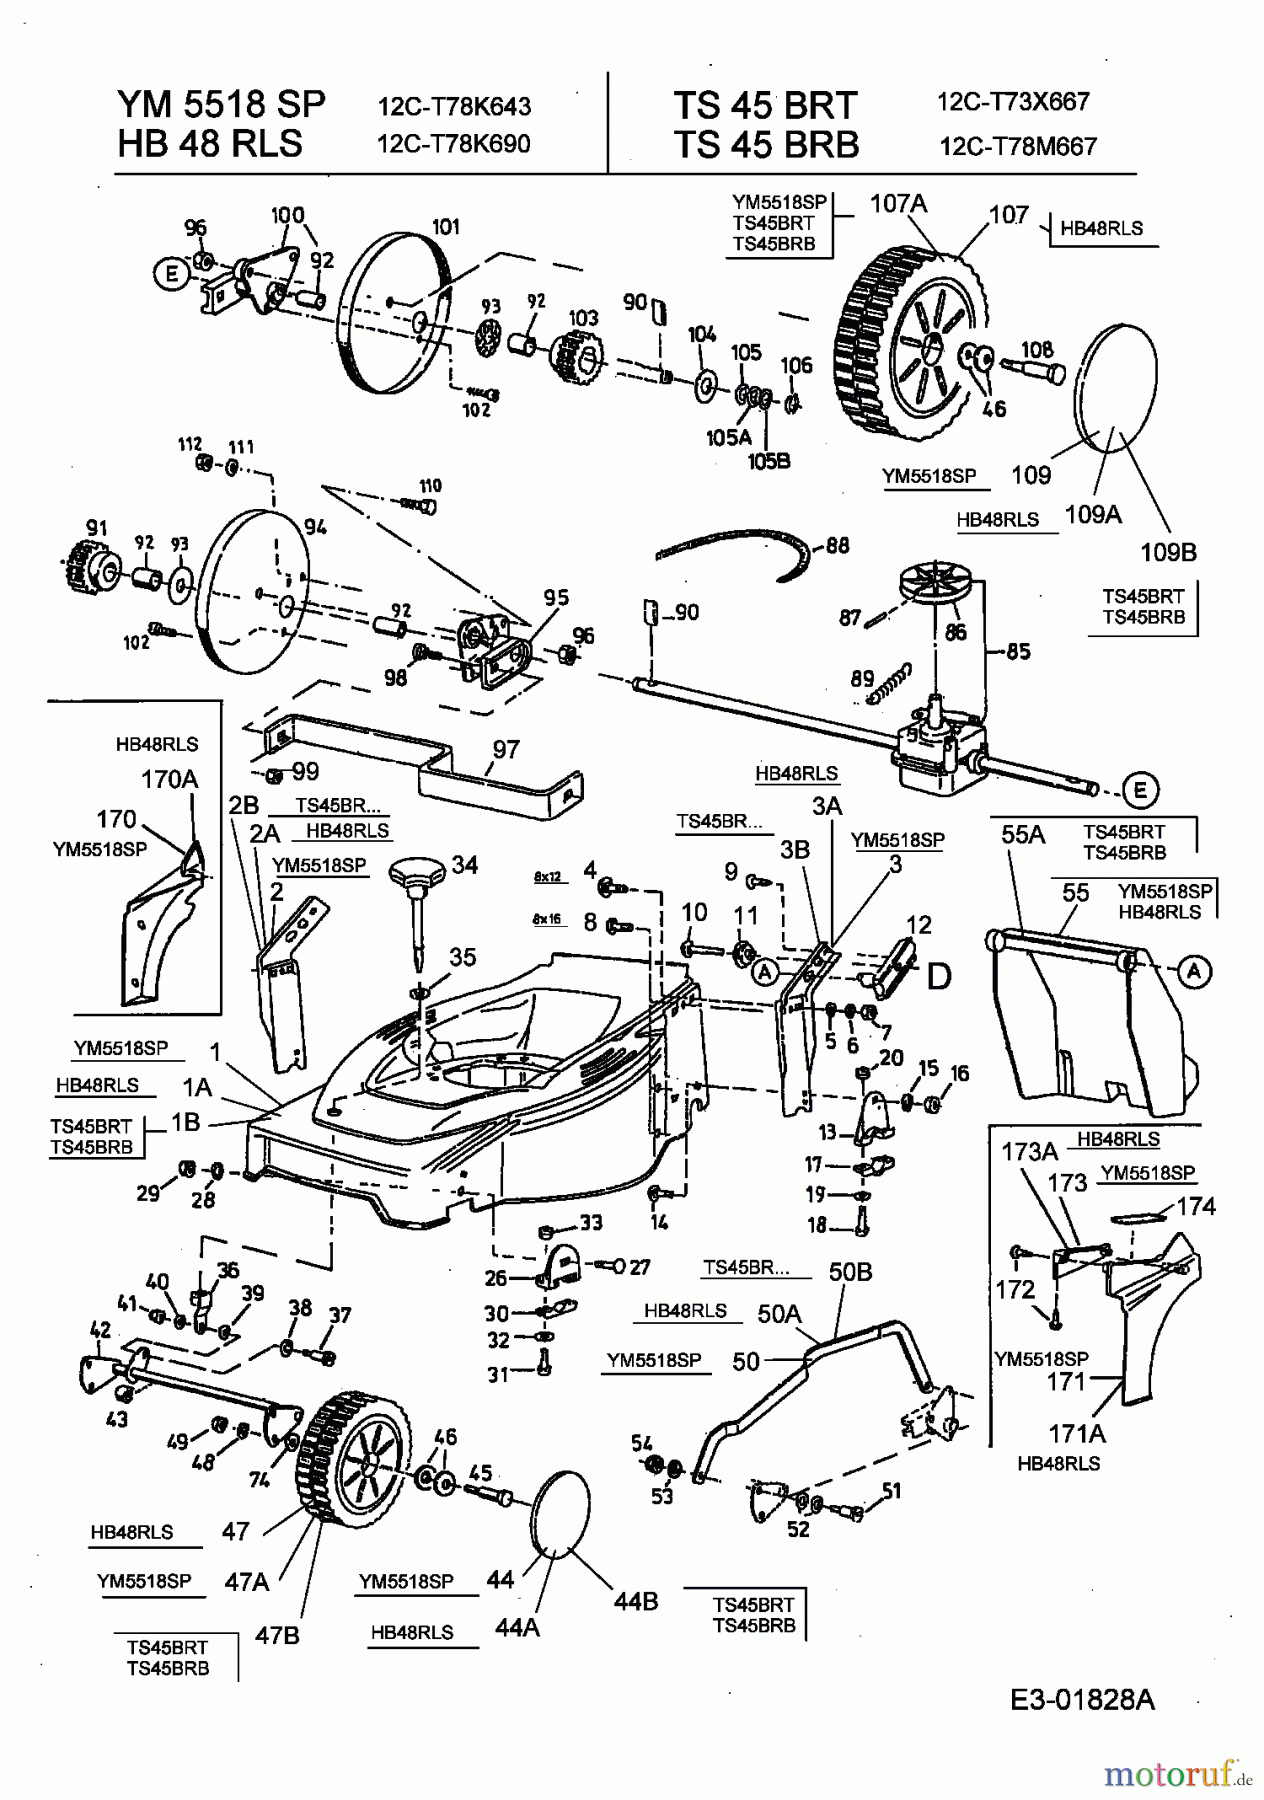  Yard-Man Petrol mower self propelled YM 5518 SP 12C-T78K643  (2003) Gearbox, Wheels, Cutting hight adjustment